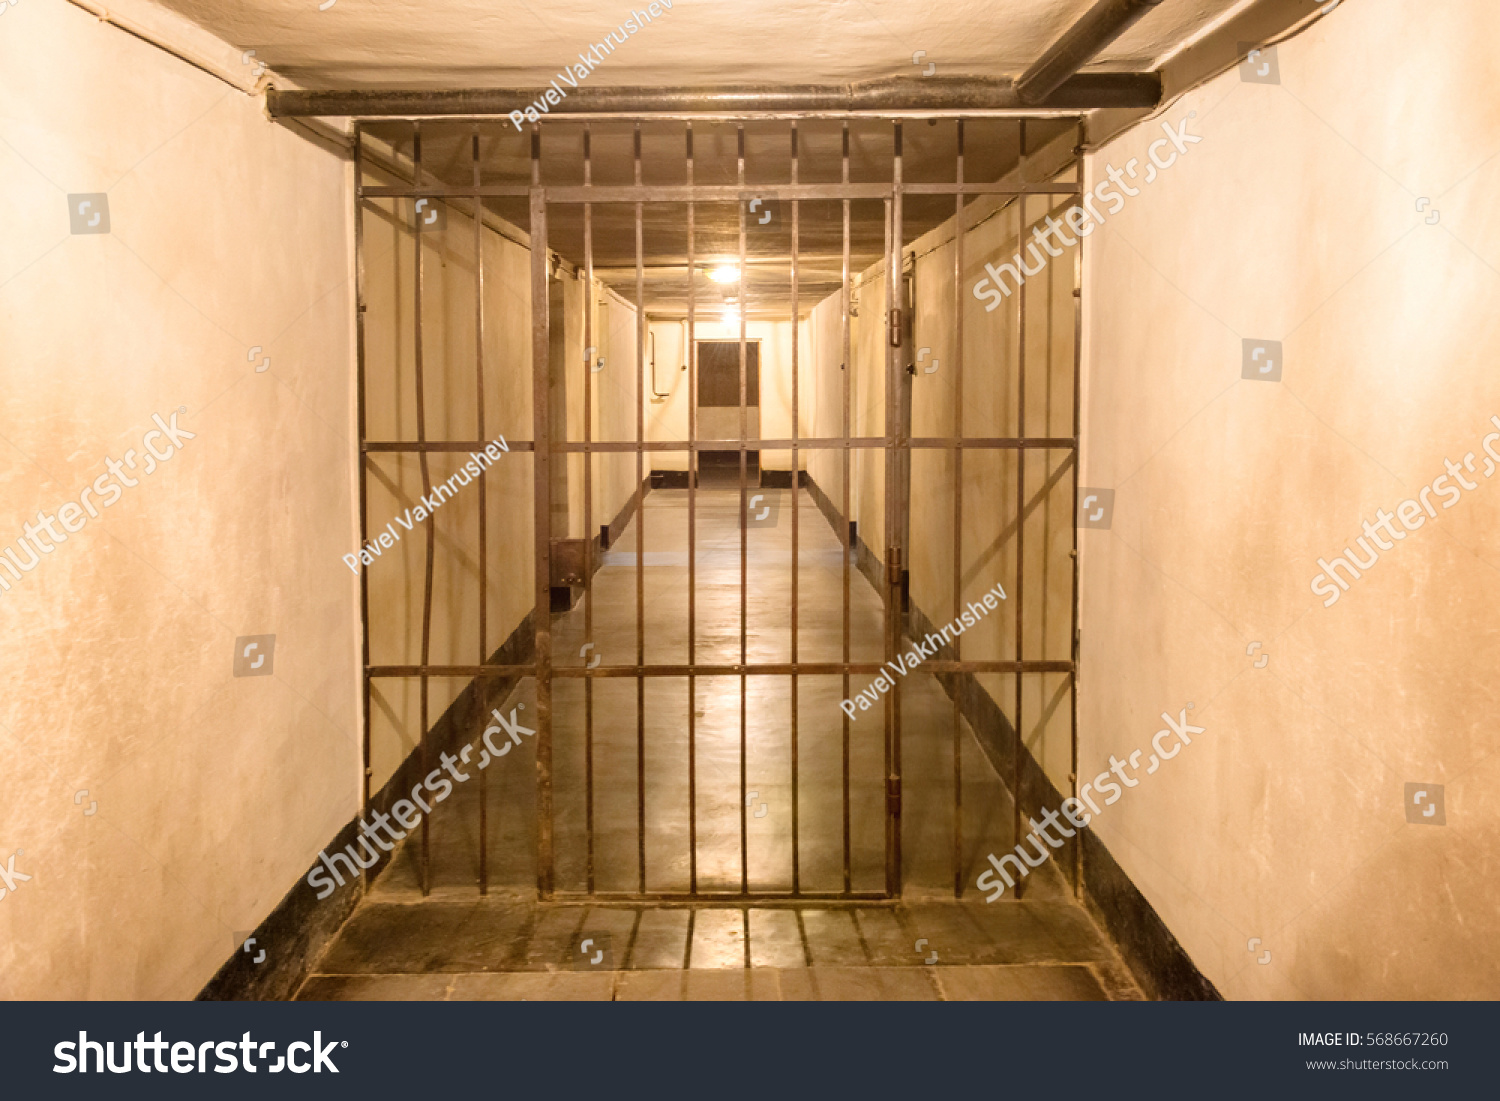 Prison Cell Jail Iron Bars Criminals Foto Stock Shutterstock